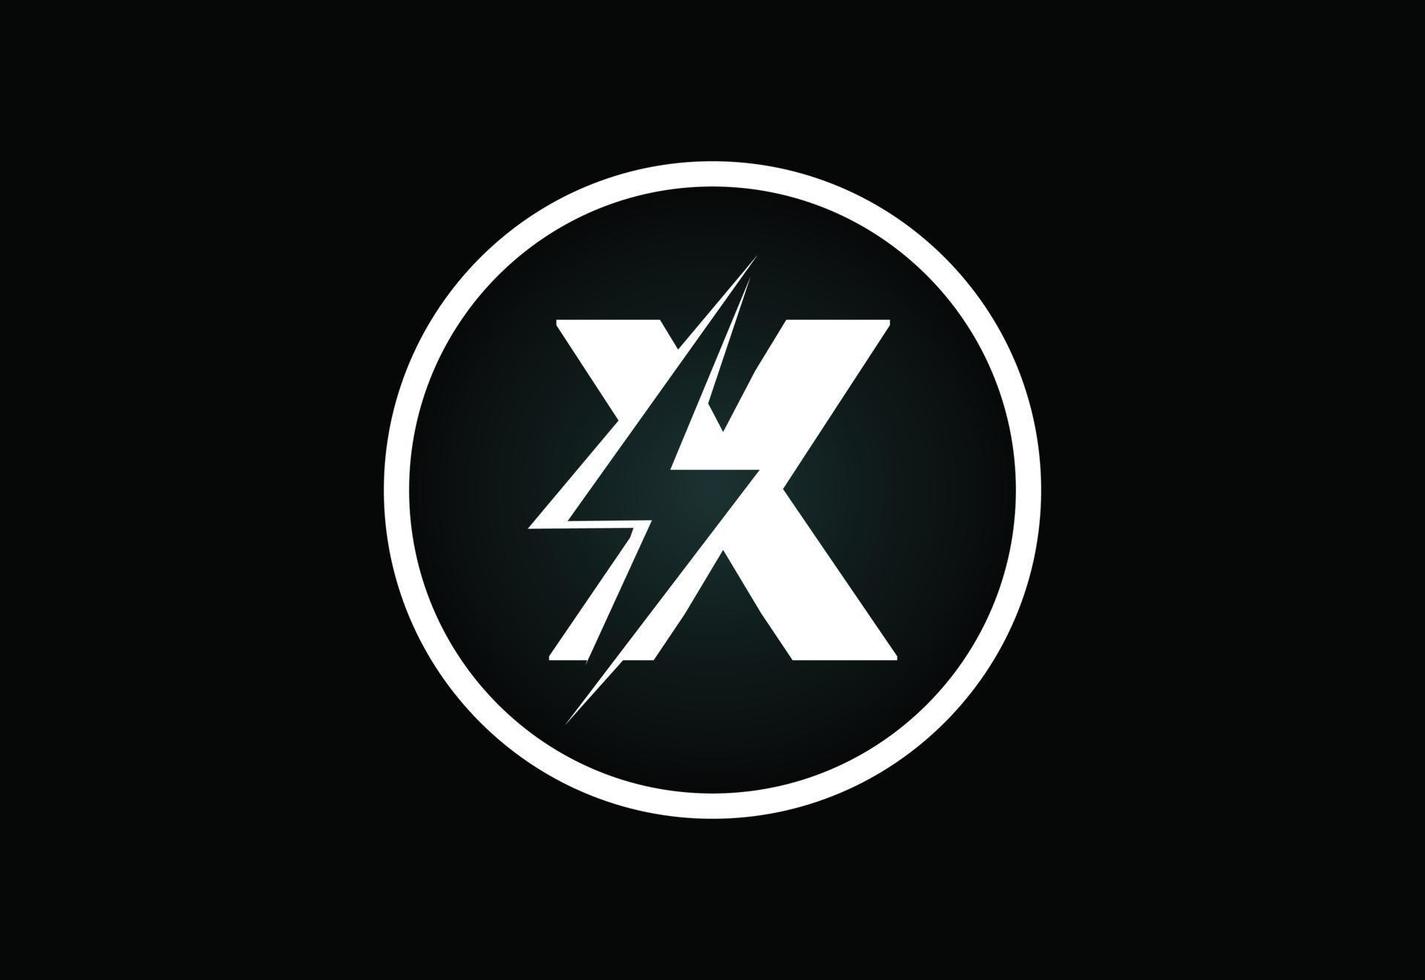 eerste X brief logo ontwerp met verlichting donder bout. elektrisch bout brief logo vector